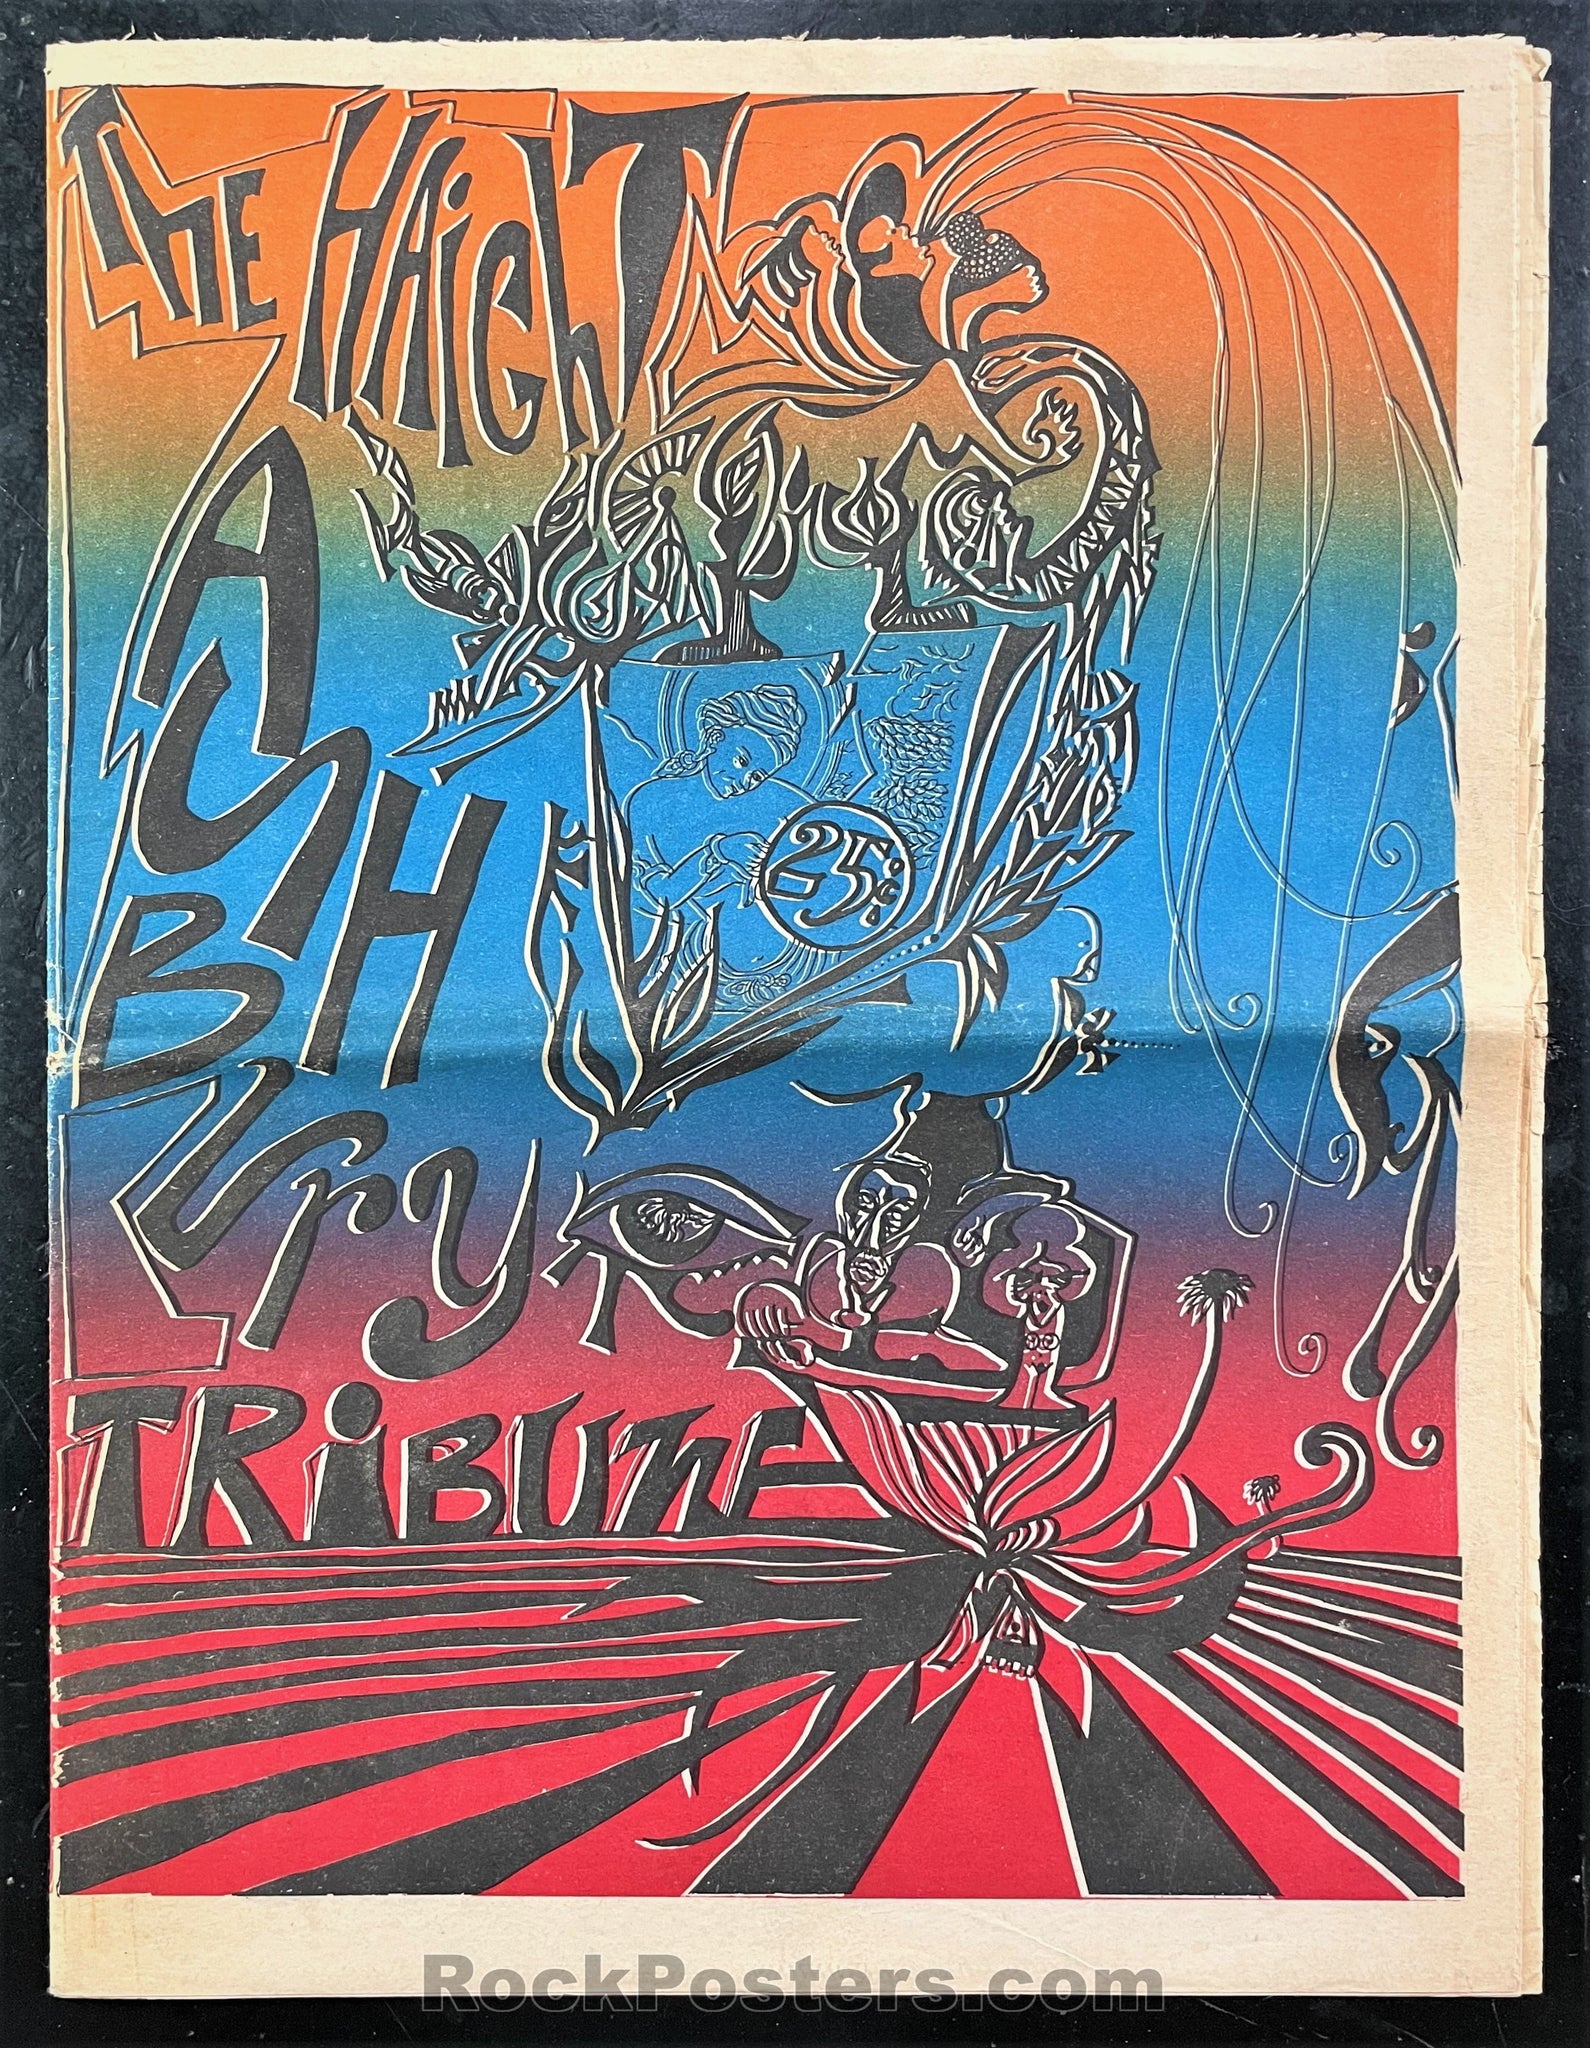 AUCTION - The Haight Ashbury Tribune 1967 - Underground Newspaper - Excellent